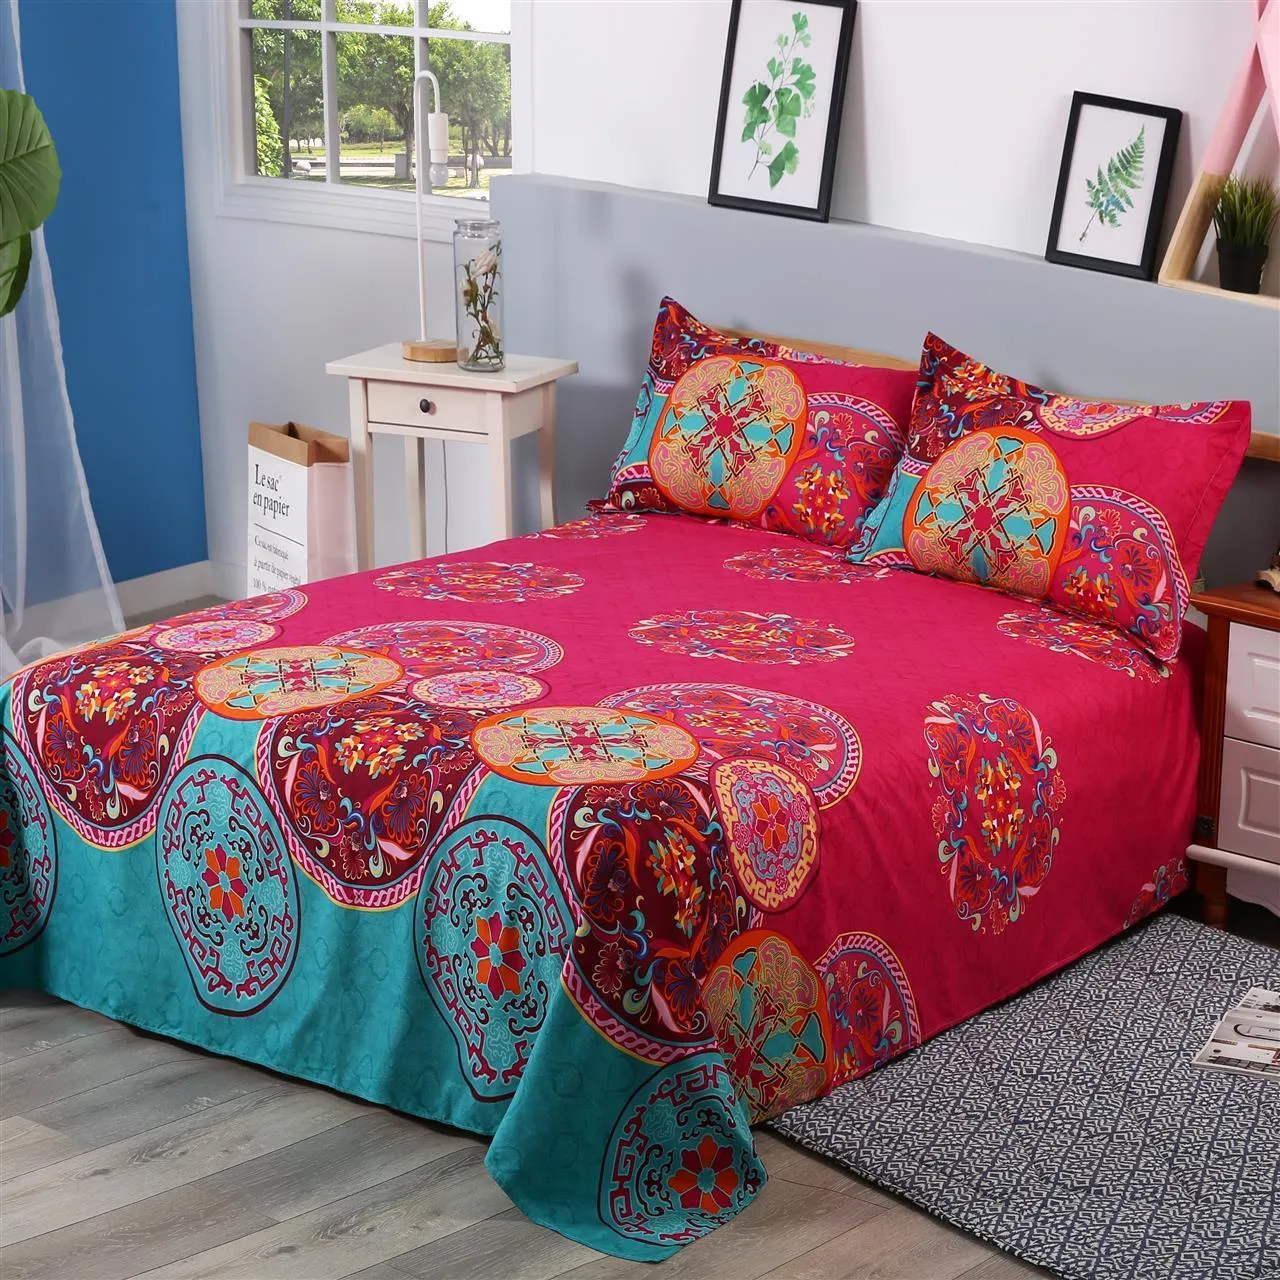 Boheemian Bed Cover 3d Mandala Printing Blade Indian Home Decor Batt -Spread Tapestry Groothandel Hot T200409